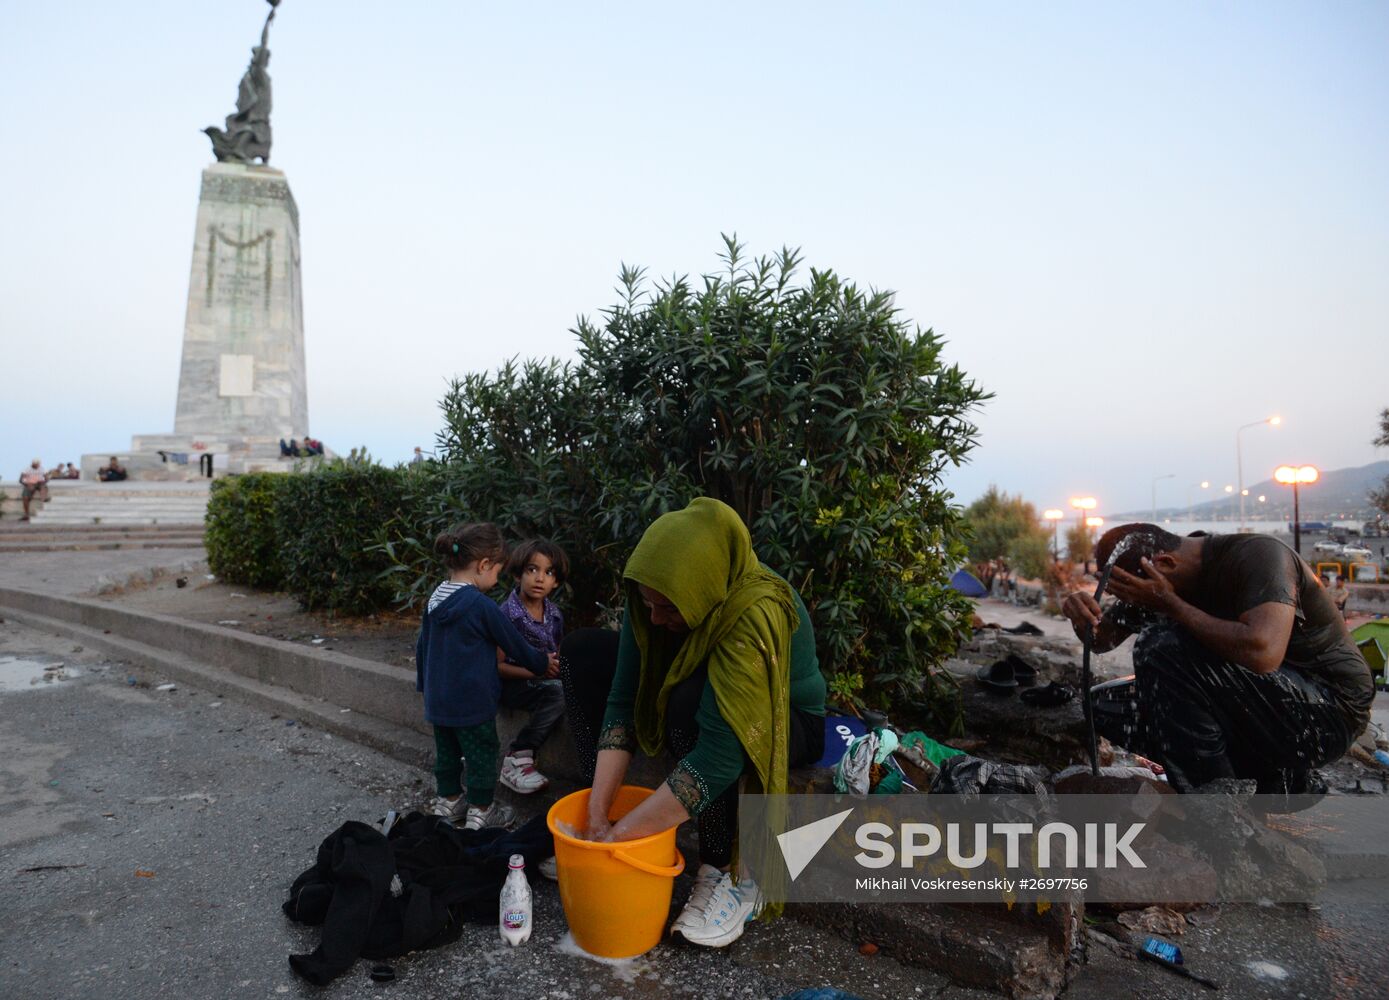 Refugees arrive on Lesbos, Greece